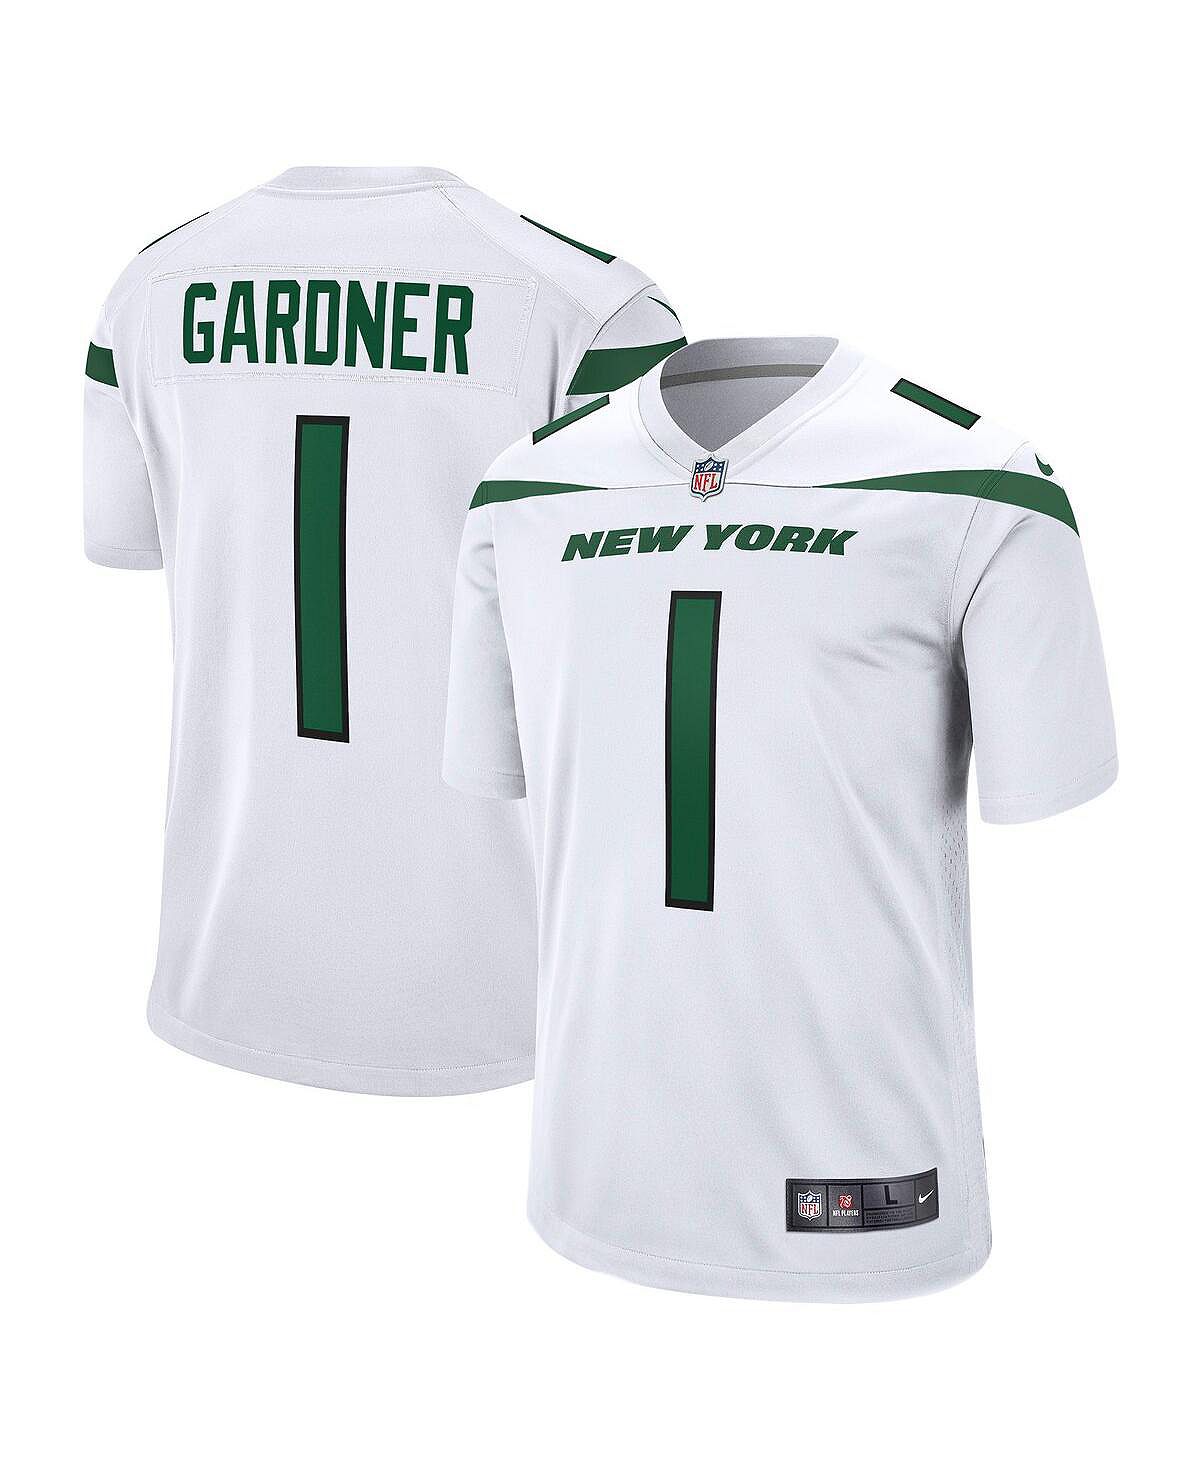 gardner lyn olivia s first term Мужская футболка ahmad sauce gardner white new york jets 2022 nfl draft first round game jersey Nike, белый